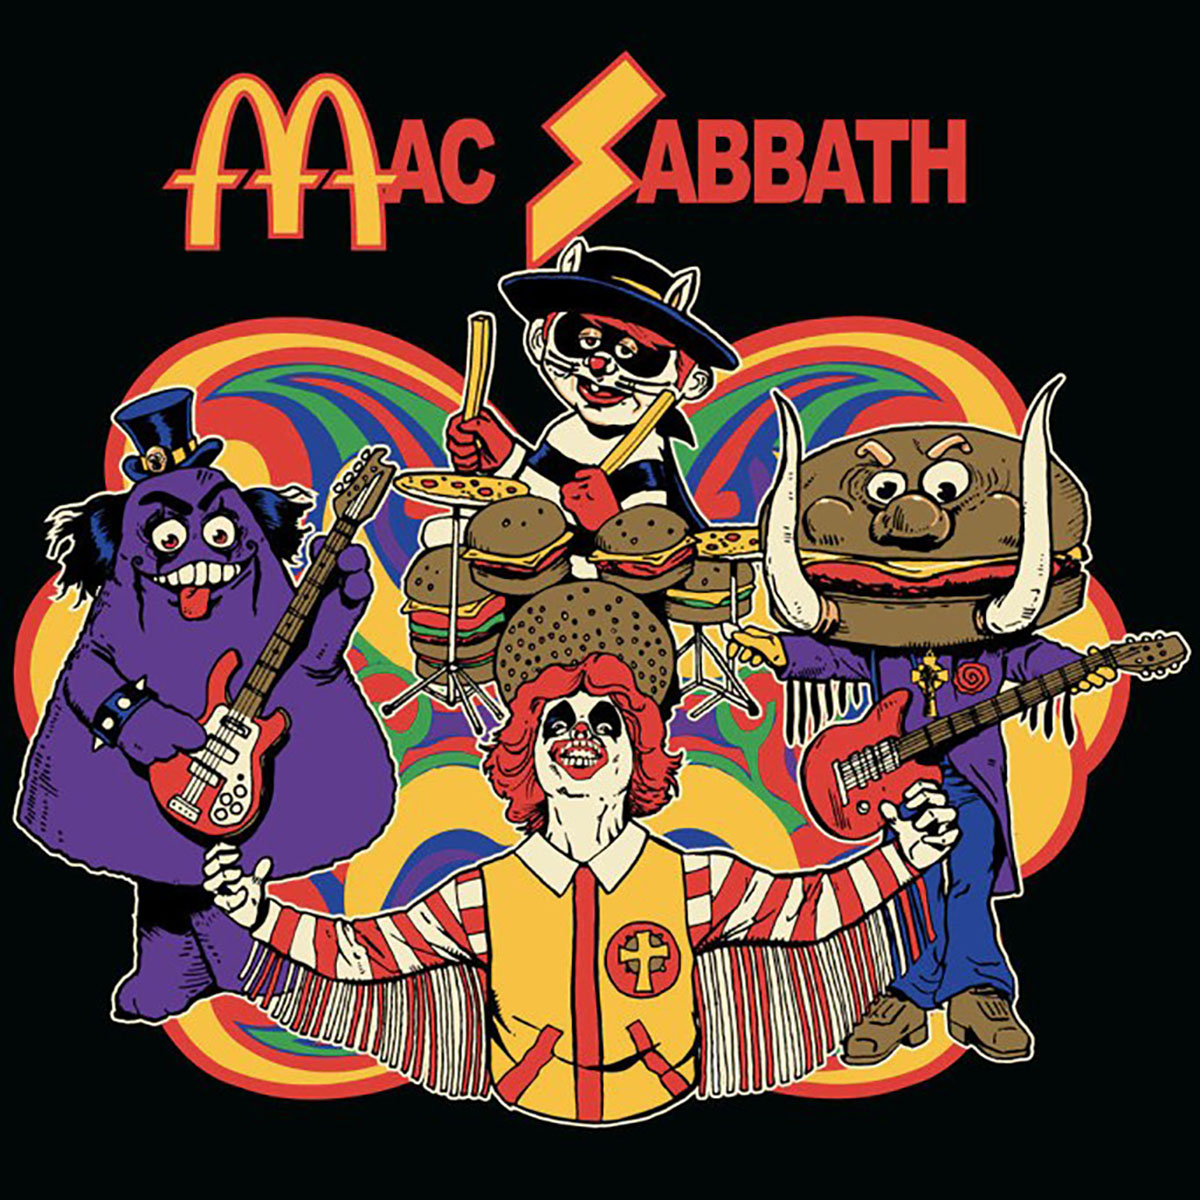 Coming Soon McDonald'sThemed Cover Band Mac Sabbath